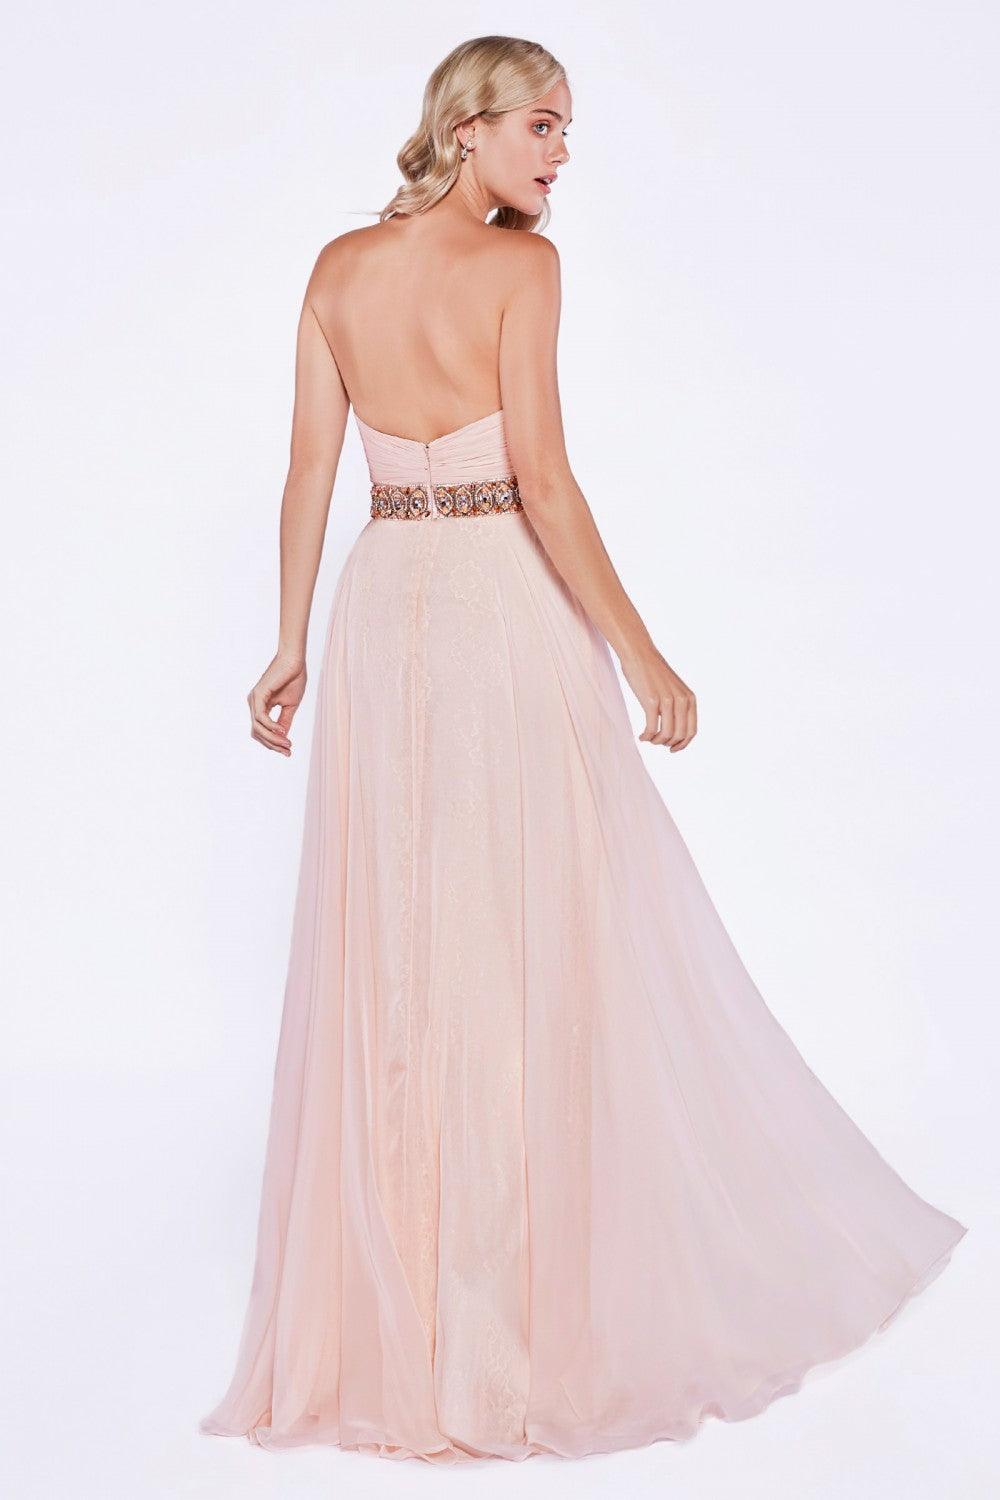 Long Strapless Formal Dress Prom - The Dress Outlet Cinderella Divine